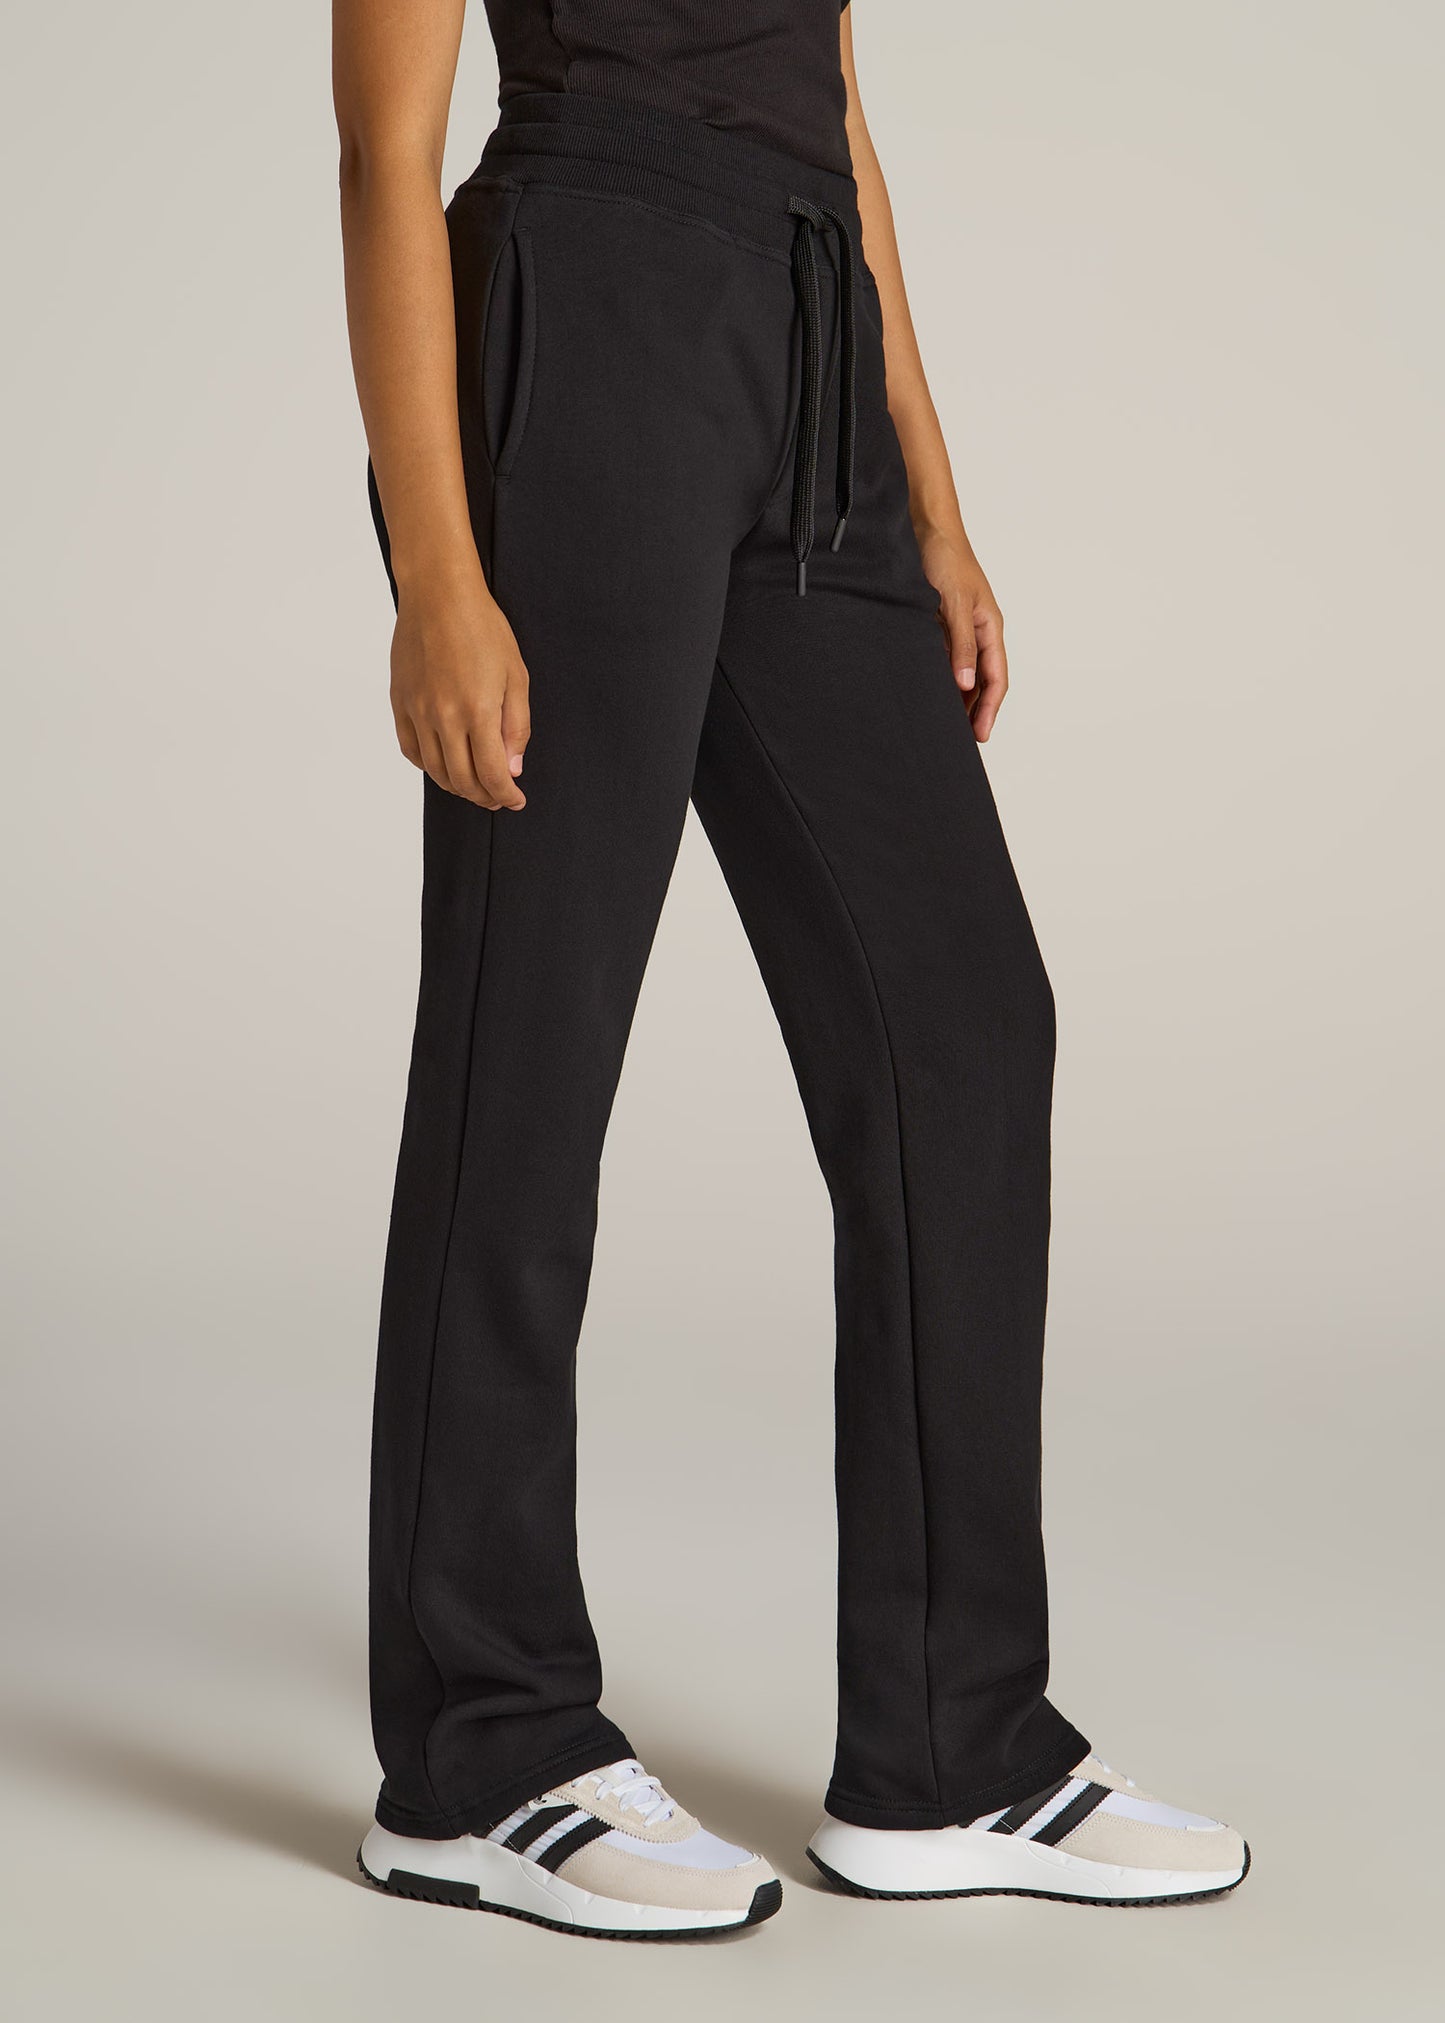 A tall woman wearing American Tall's Wearever Fleece Open-Bottom Sweatpants in the color black.